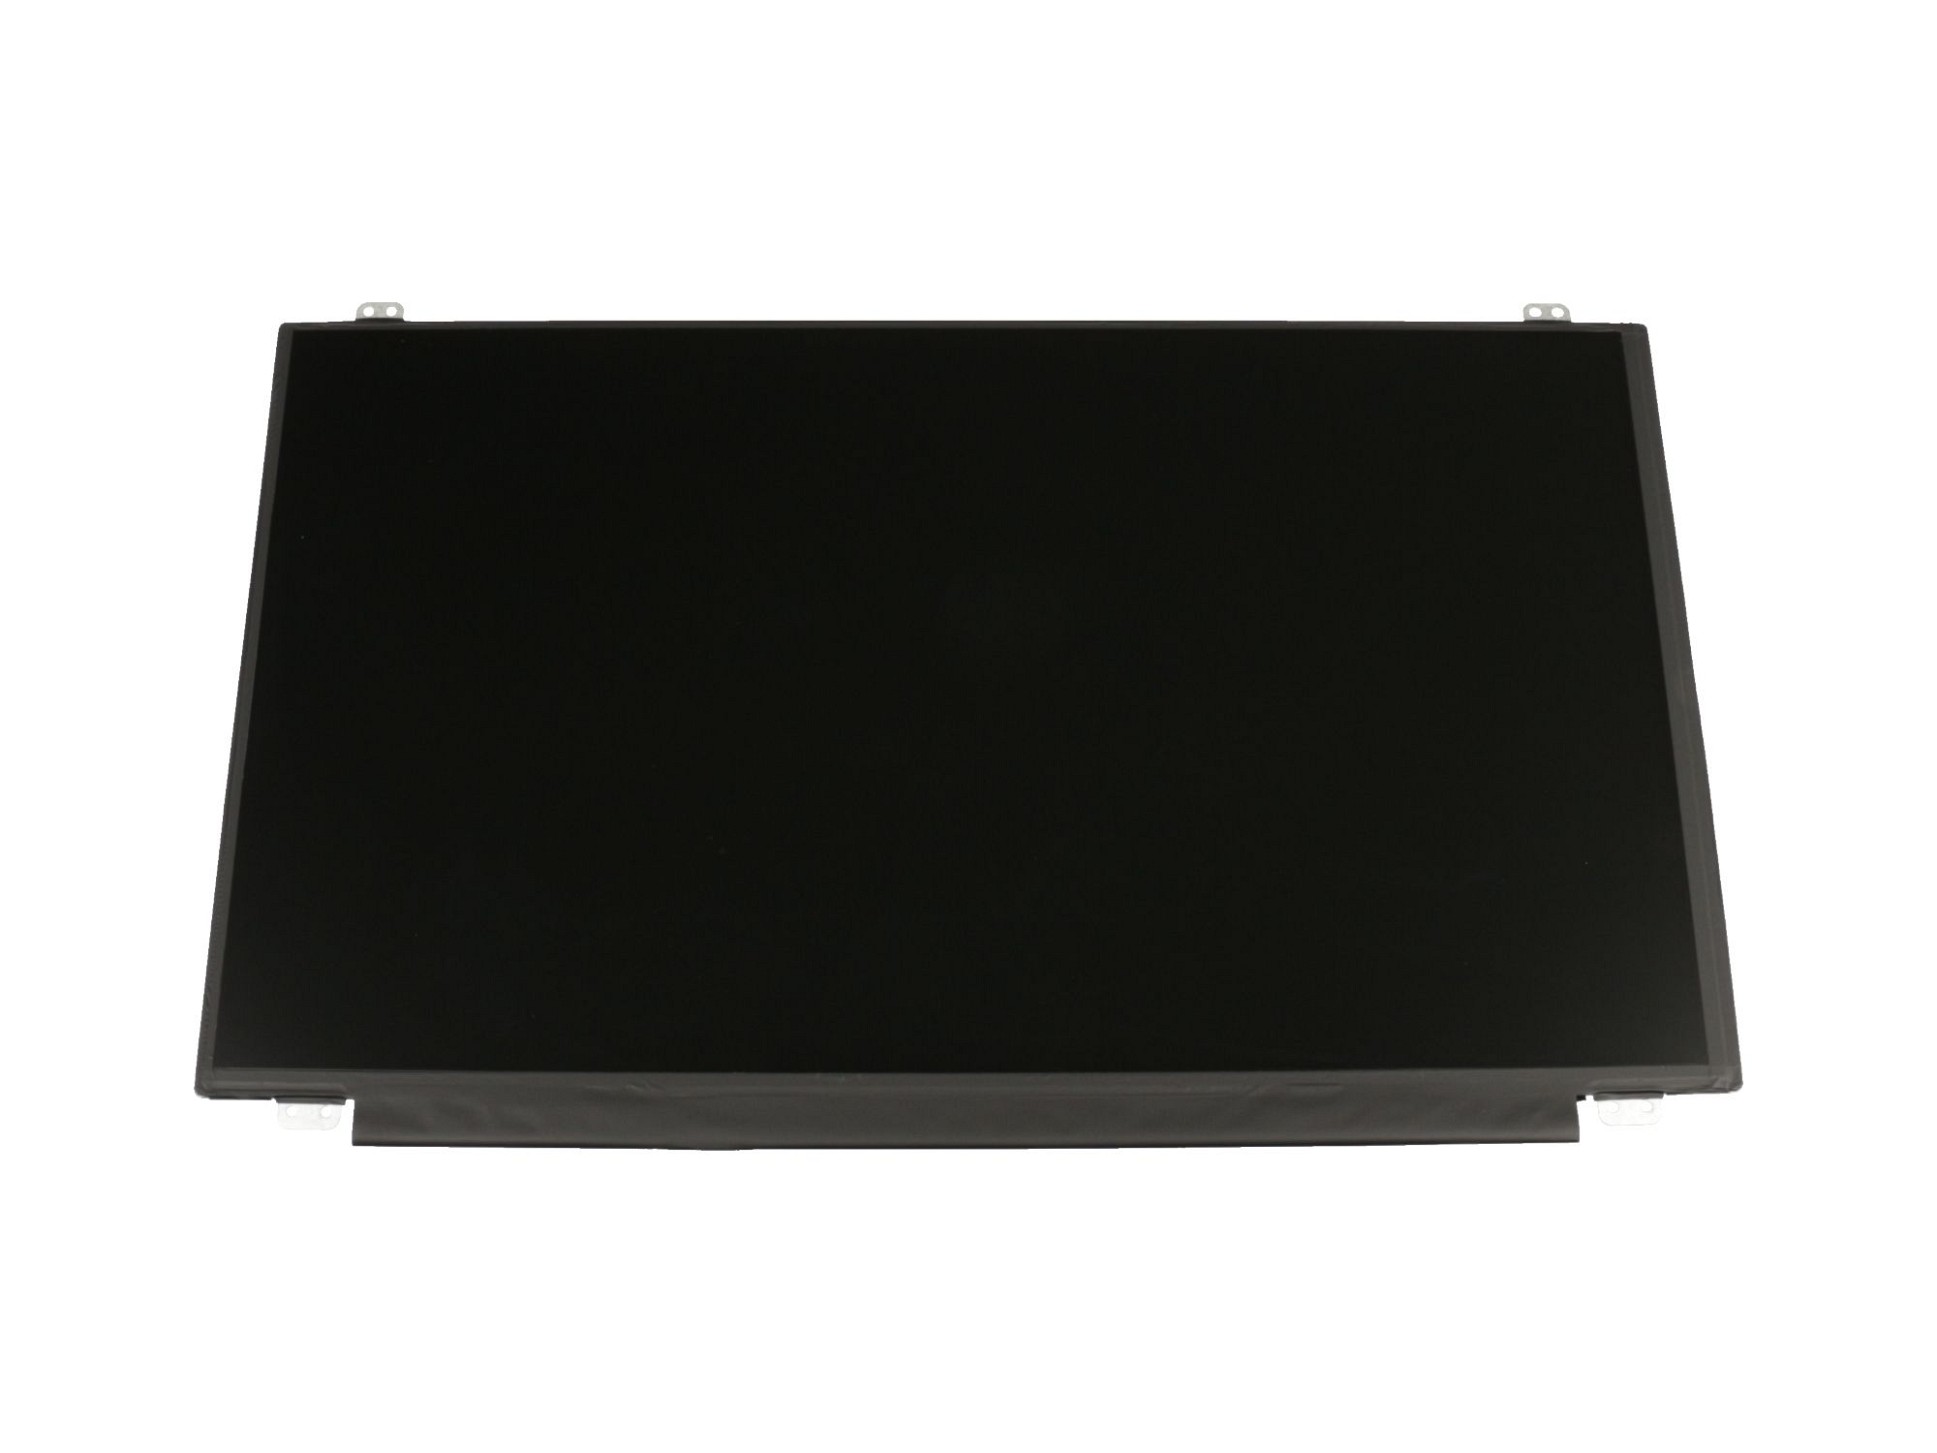 LG LP156WHU-TPH1 Display (1366x768) matt slimline